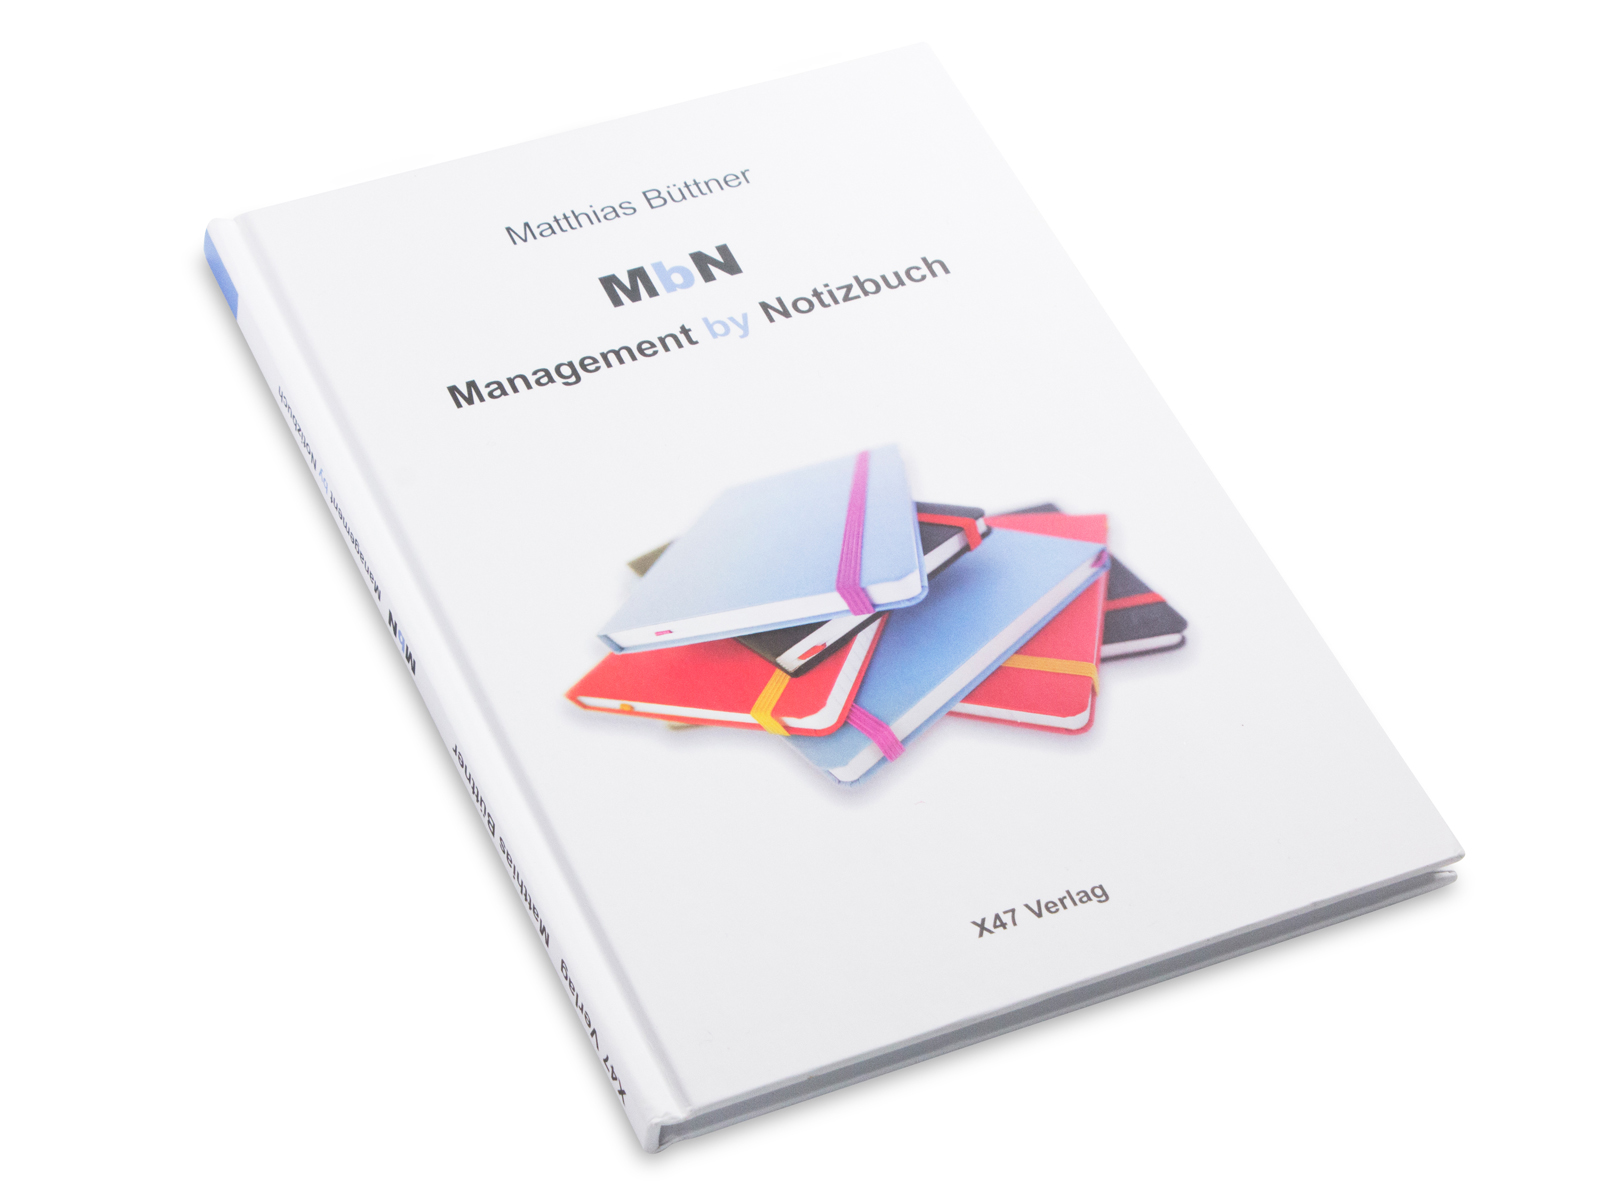 Management by Notizbuch, Hardcover